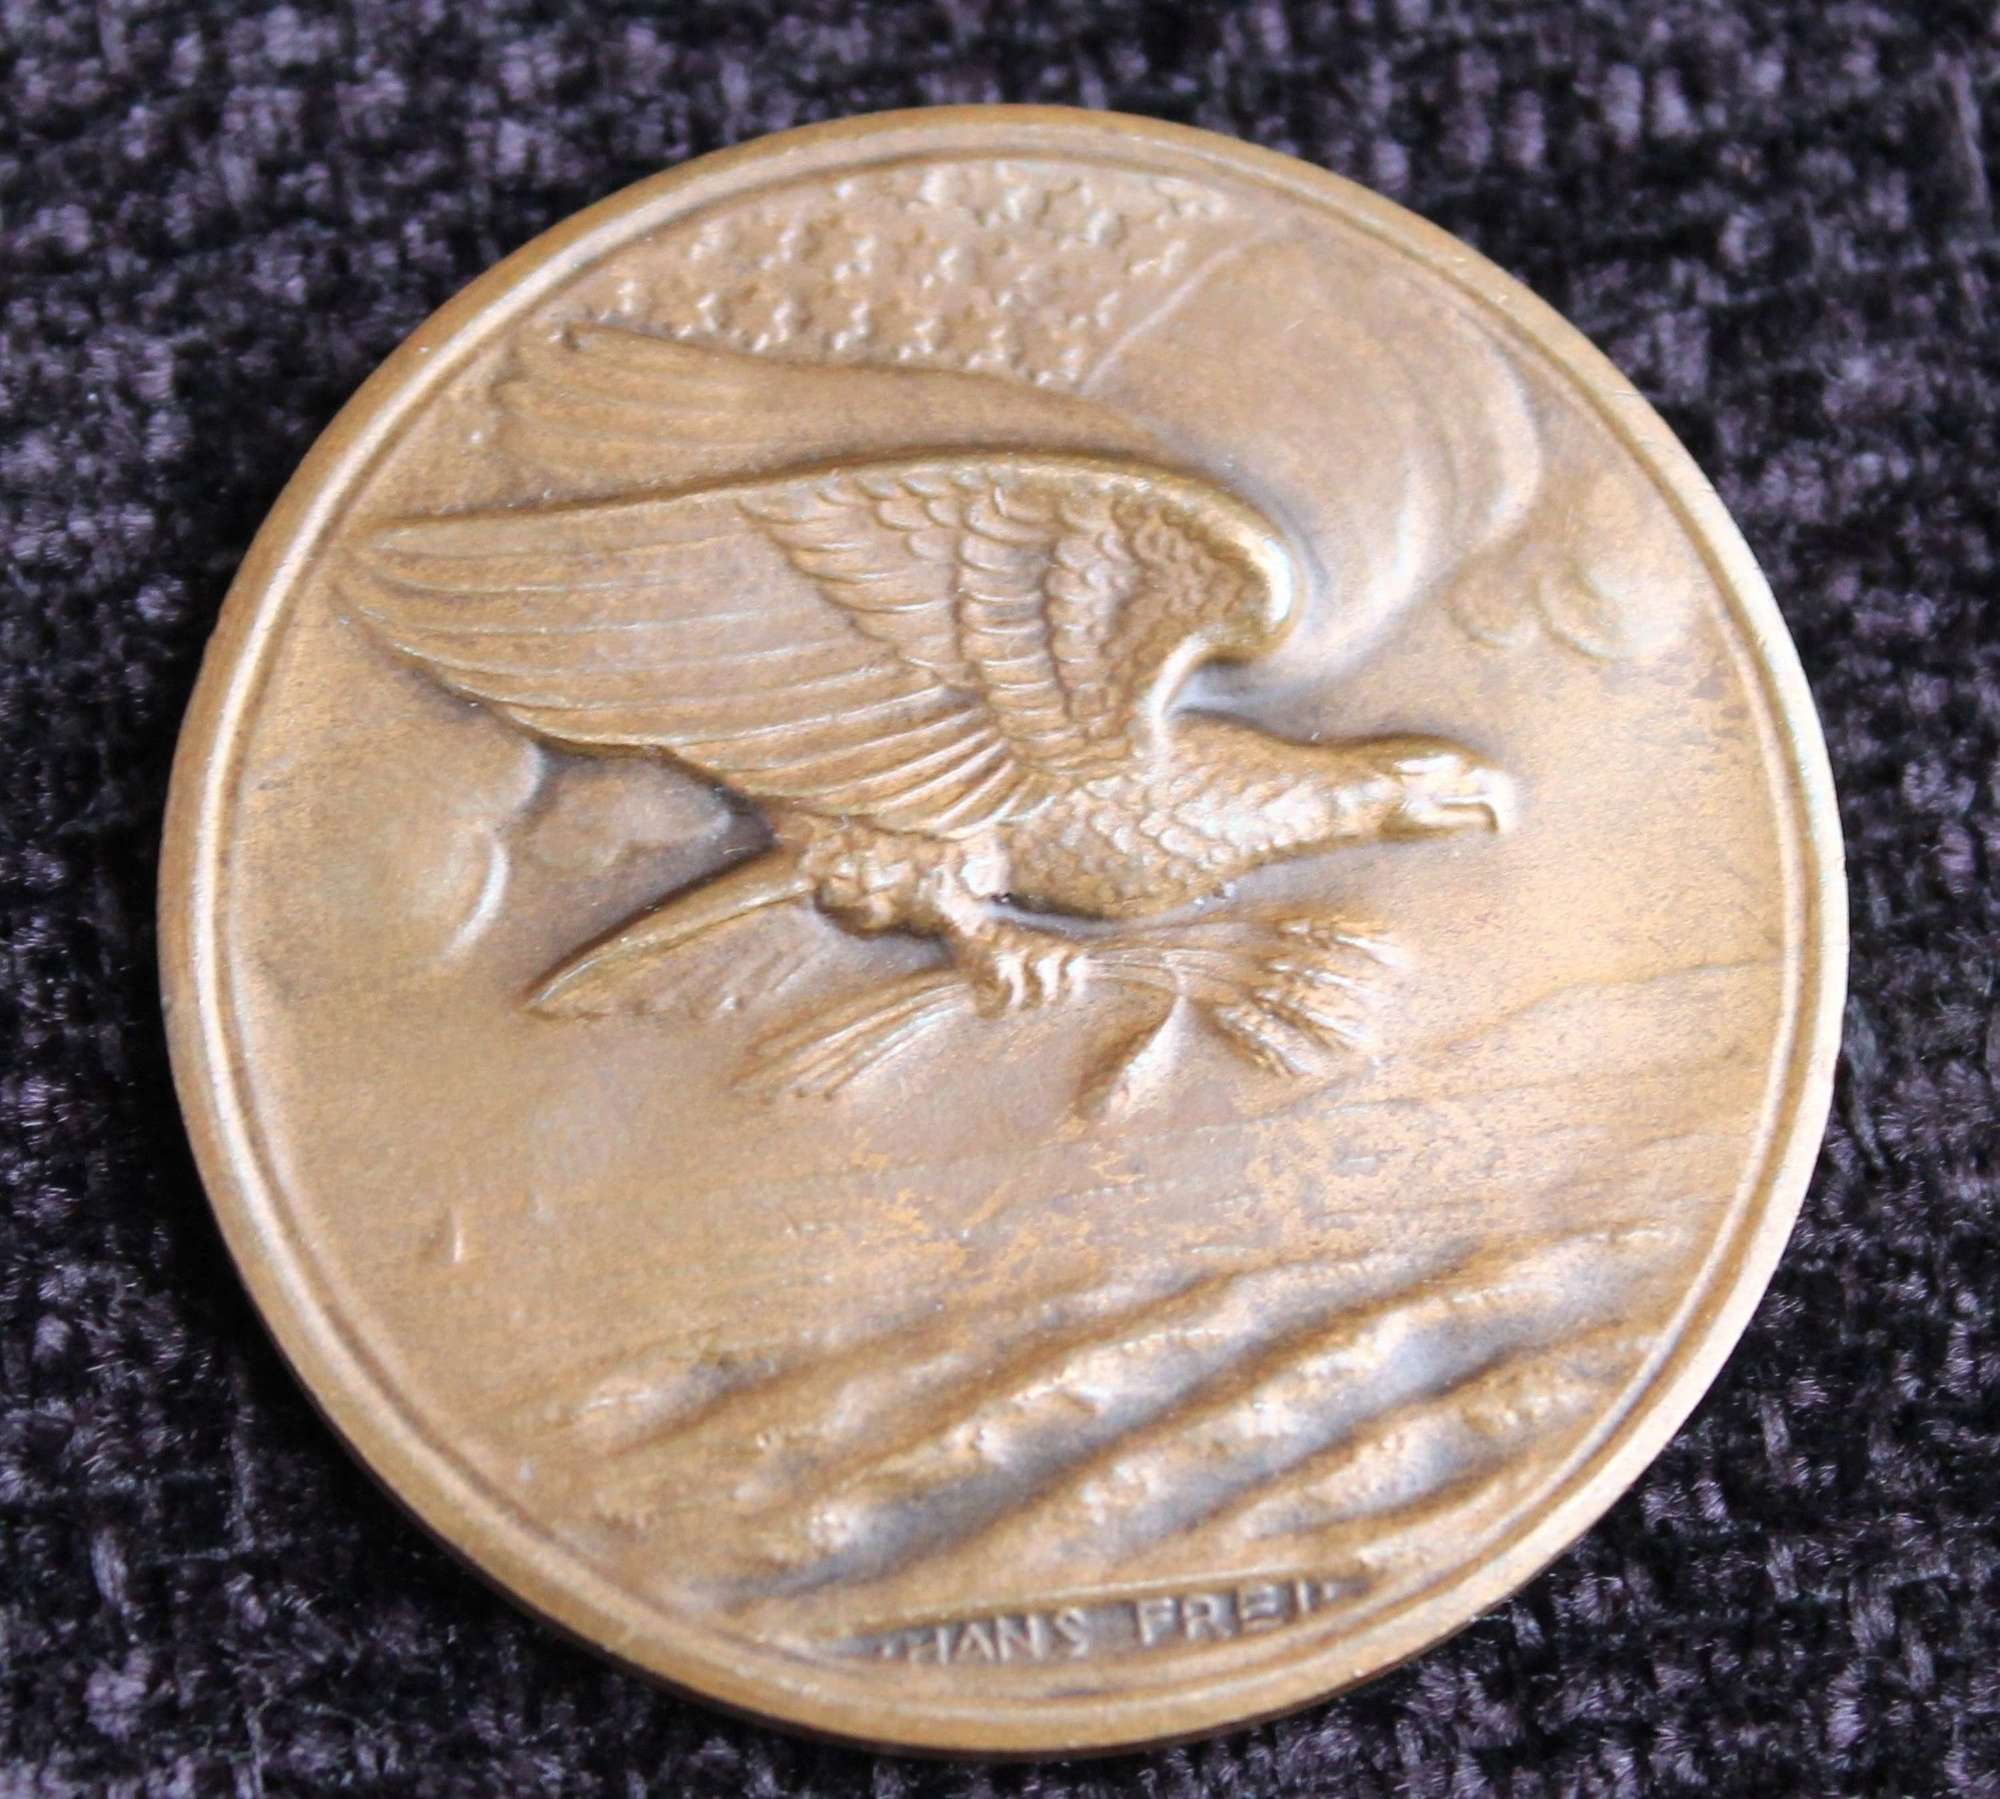 Swiss/American Commemorative Medal